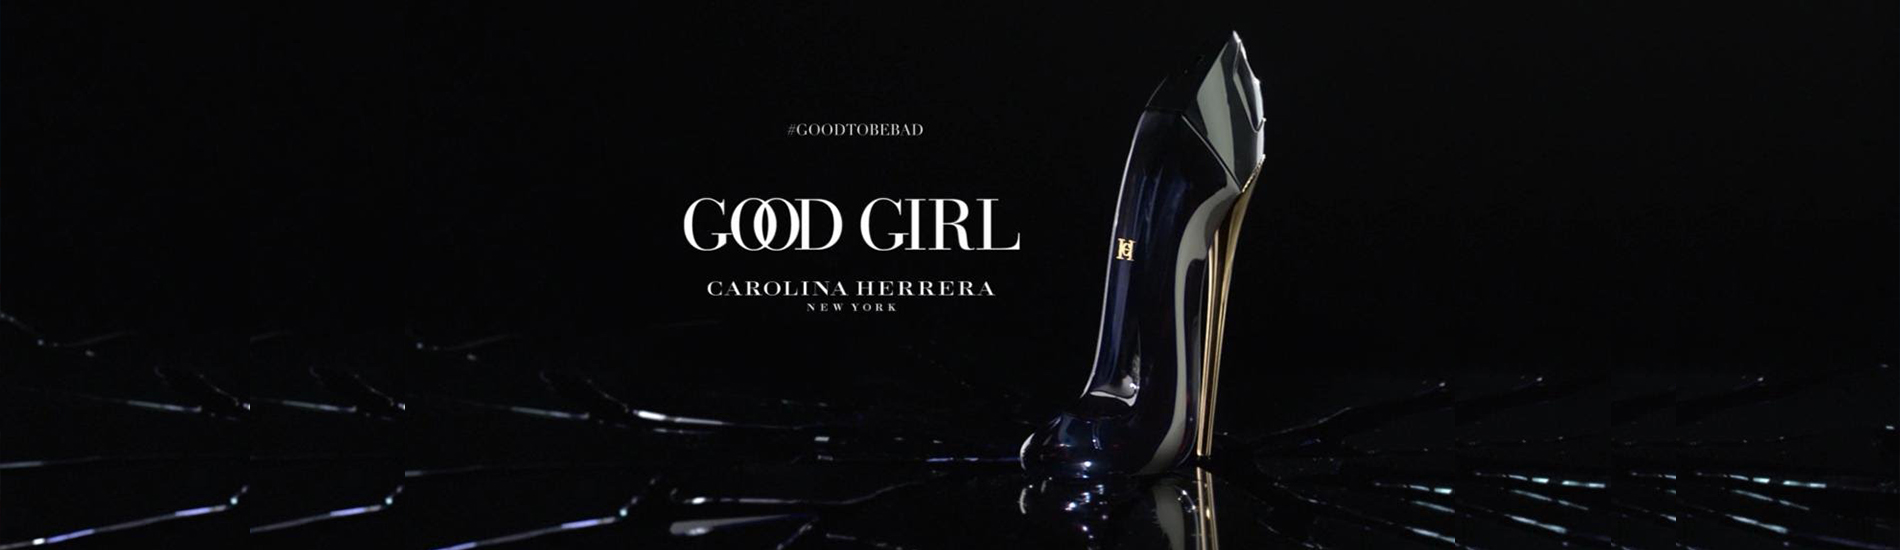 good girl Carolina Herrera